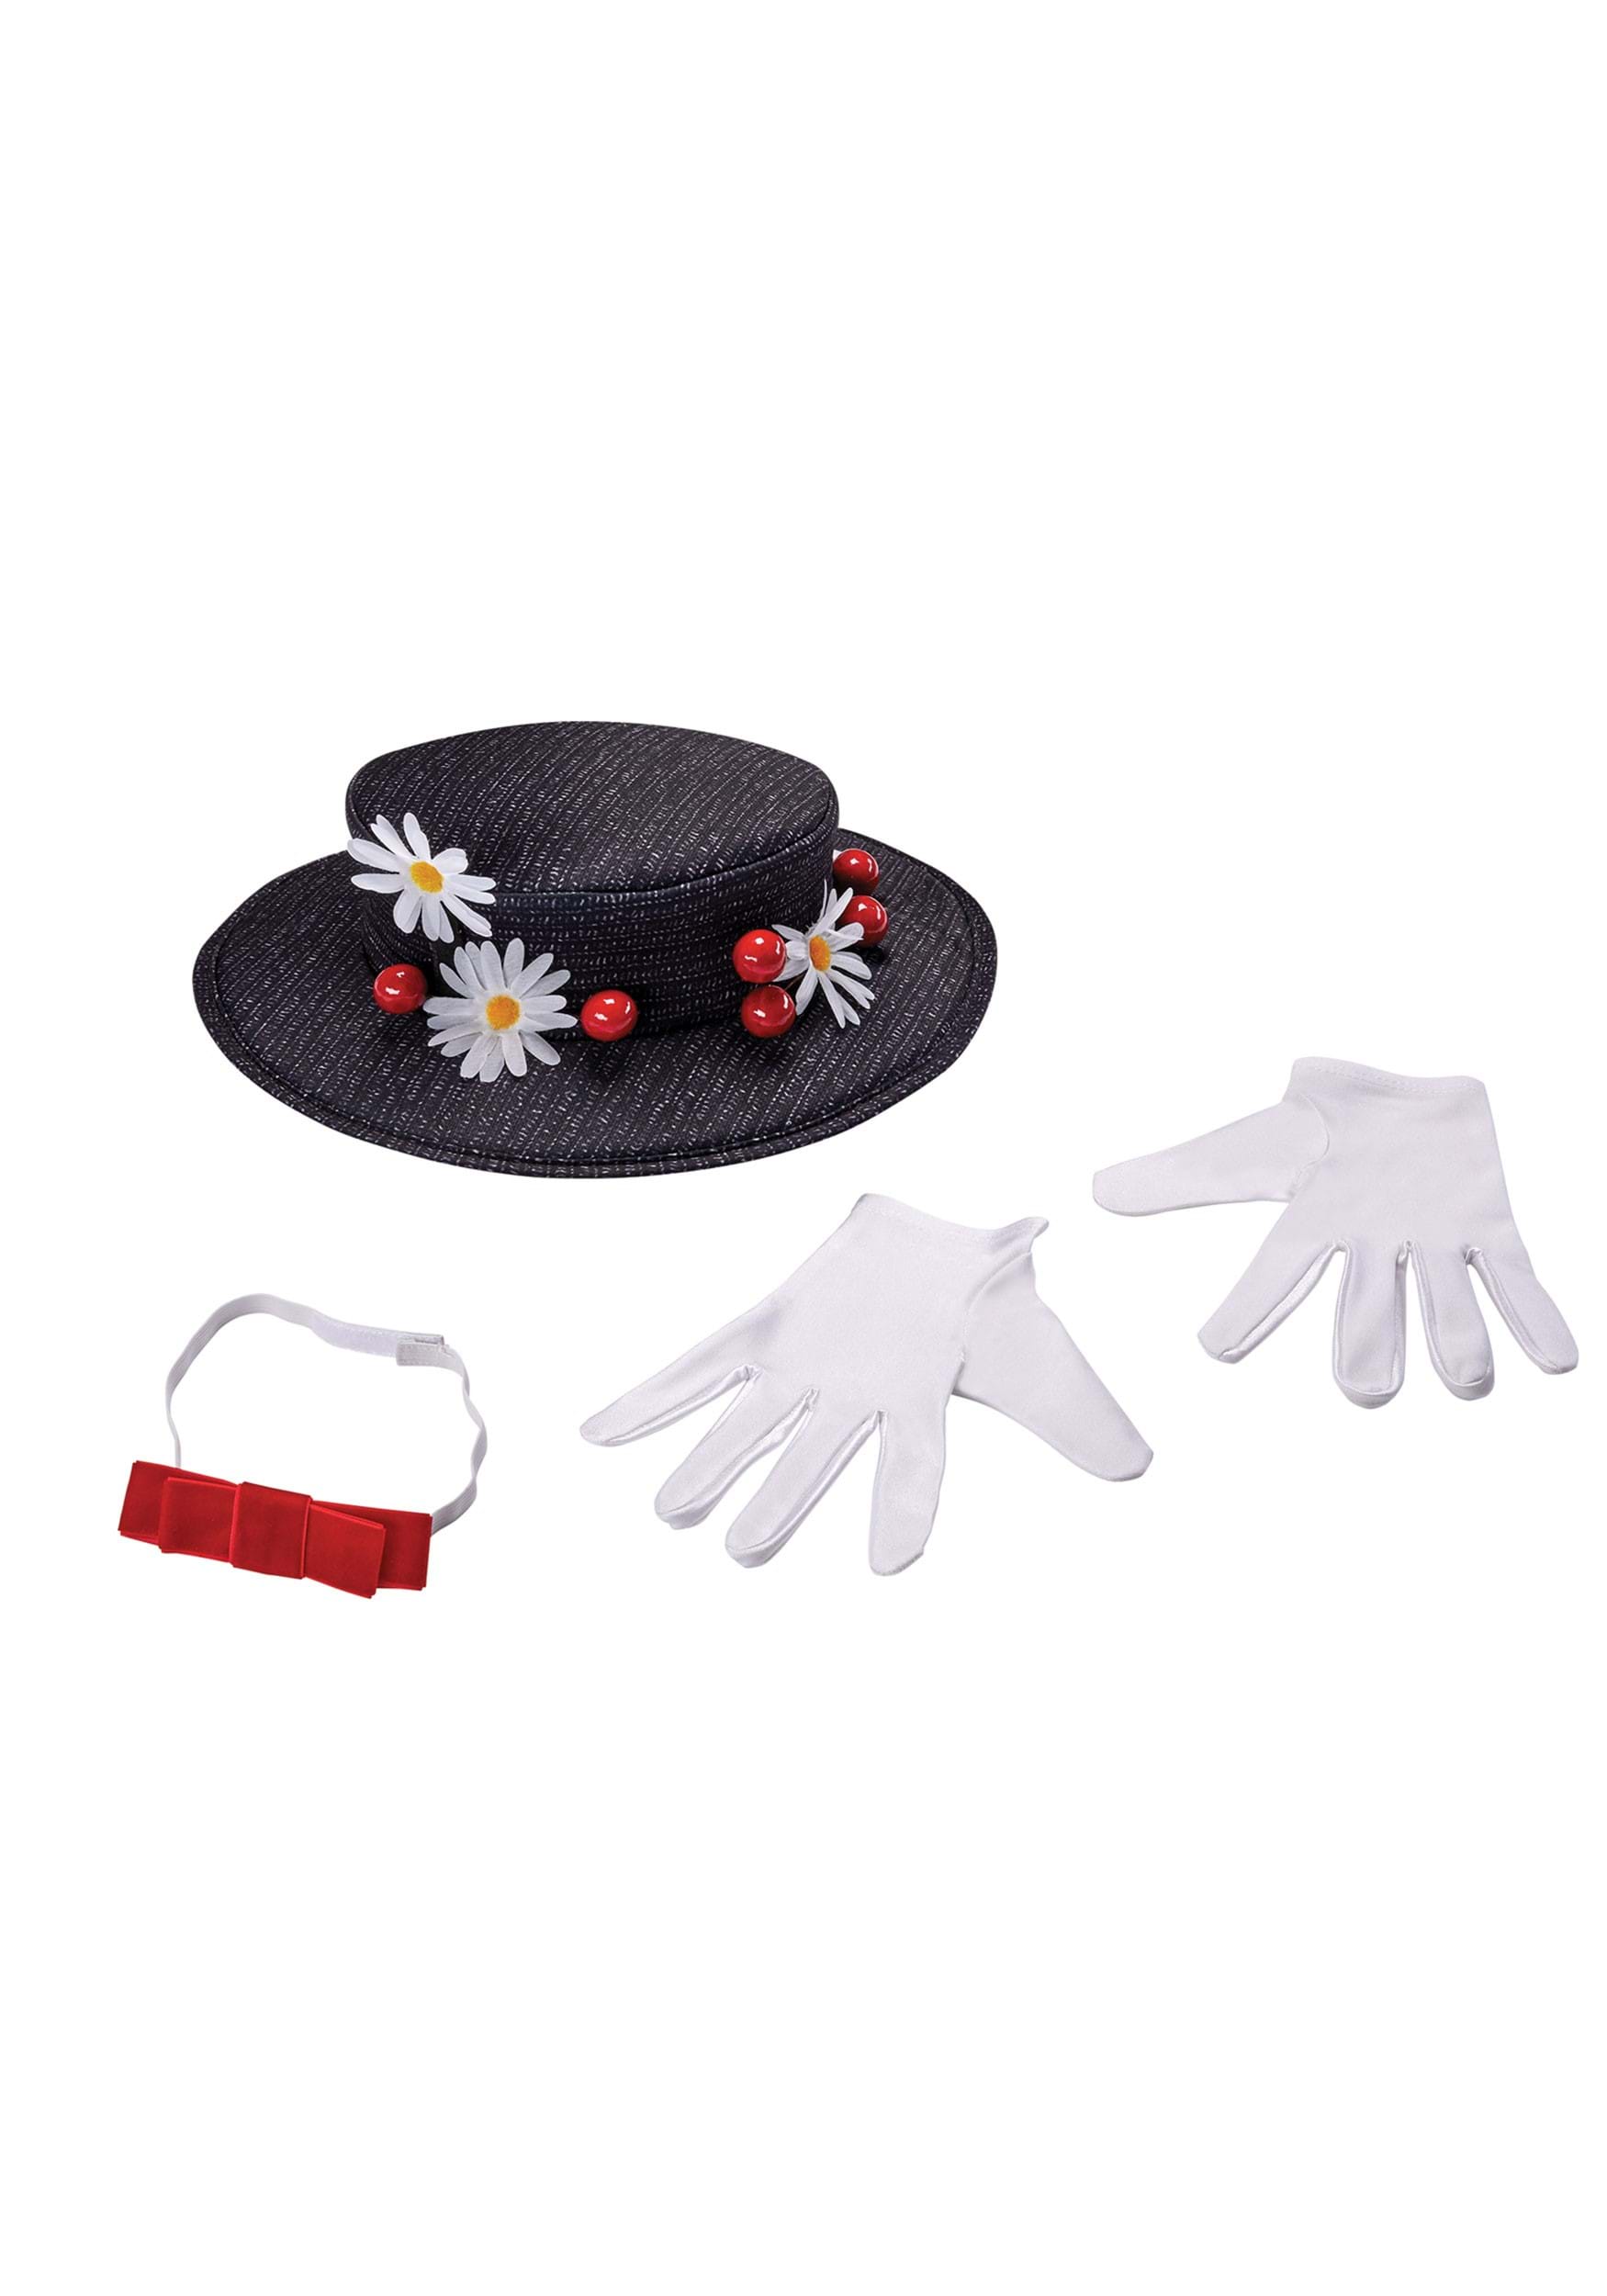 Women's Mary Poppins Fancy Dress Costume Kit , Disney Accessories